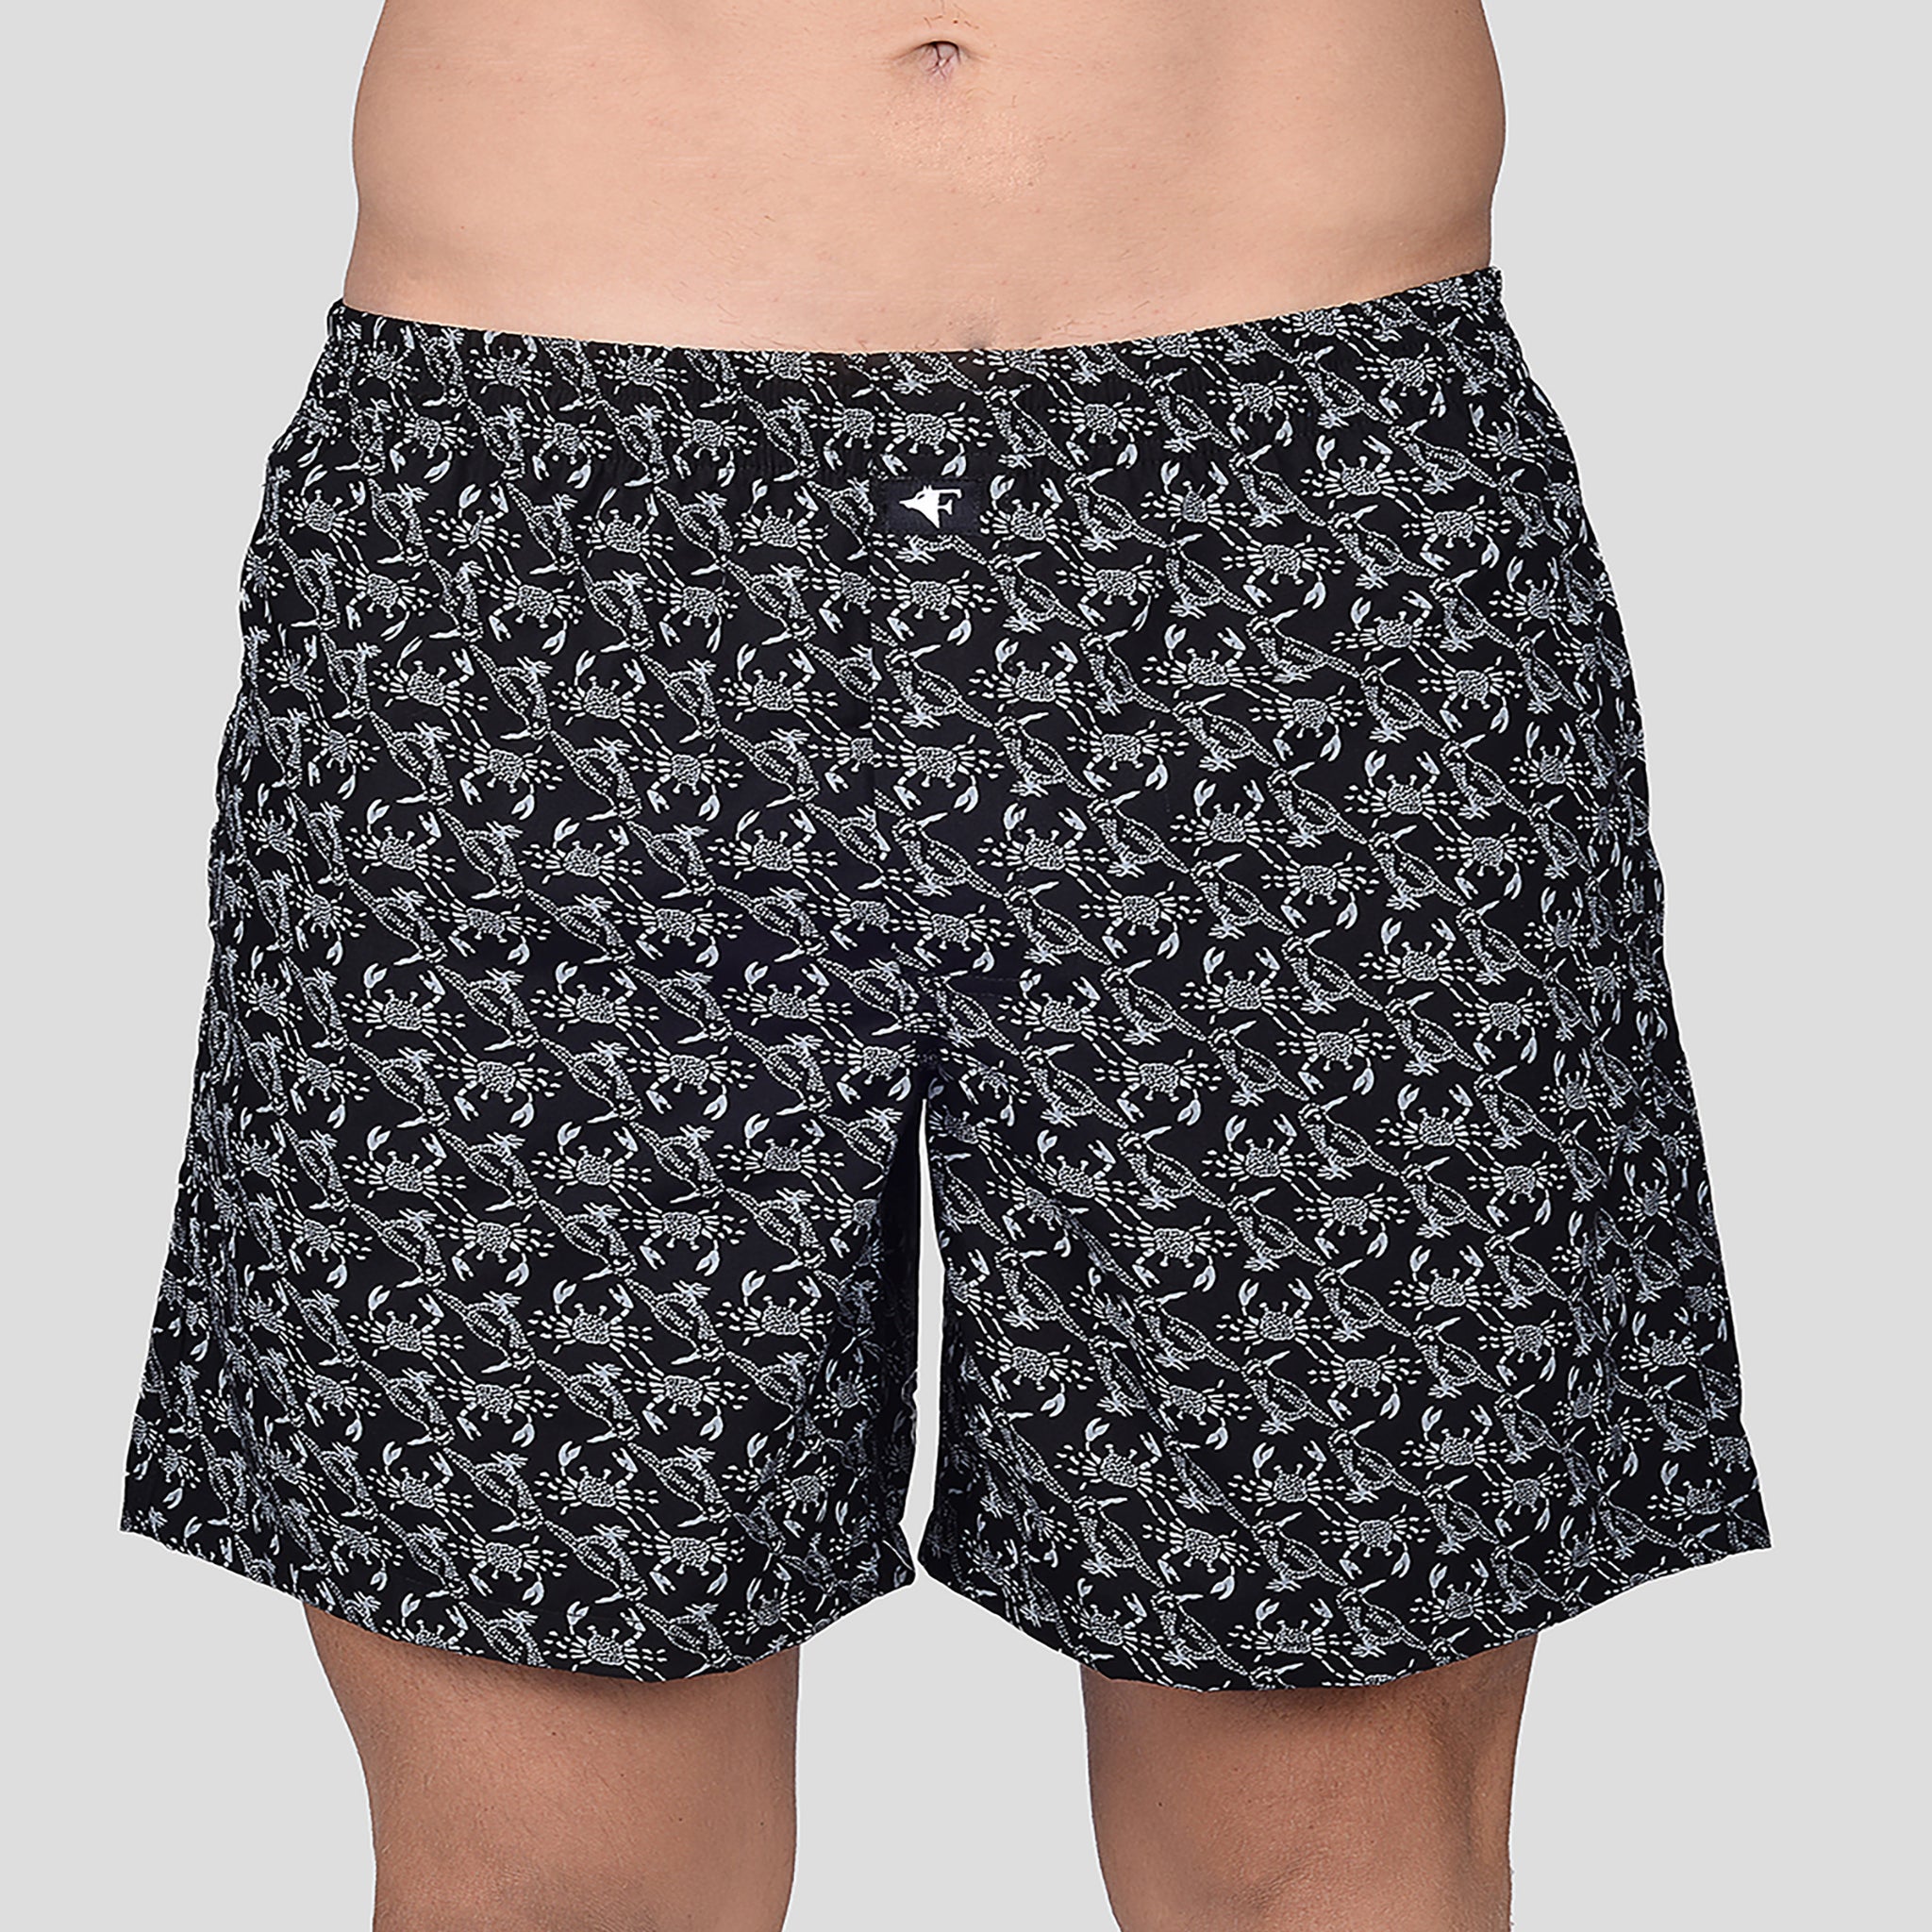 BOKSA Men's Printed Cotton Boxer Shorts with Side Pockets - Black Crab Print